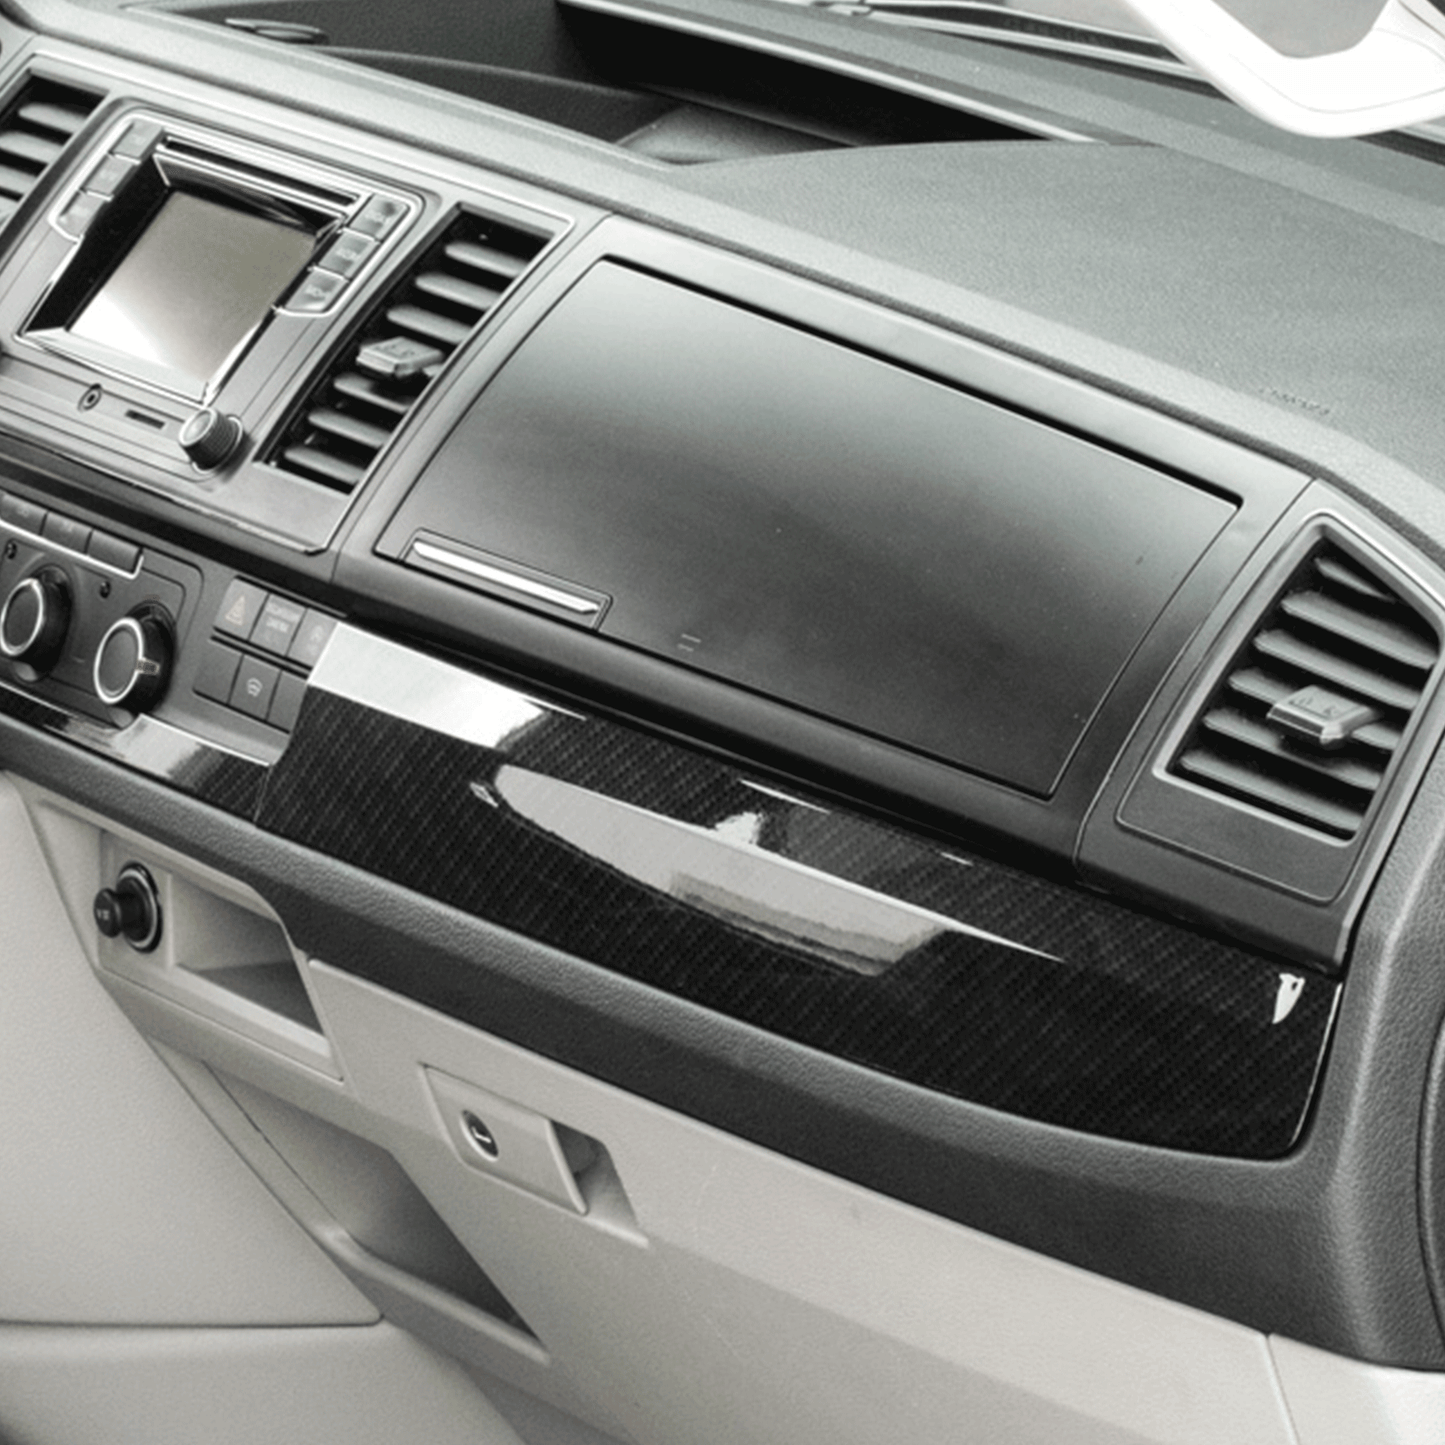 VW Transporter T6 LHD onderste dashboardstyling met koolstofeffect